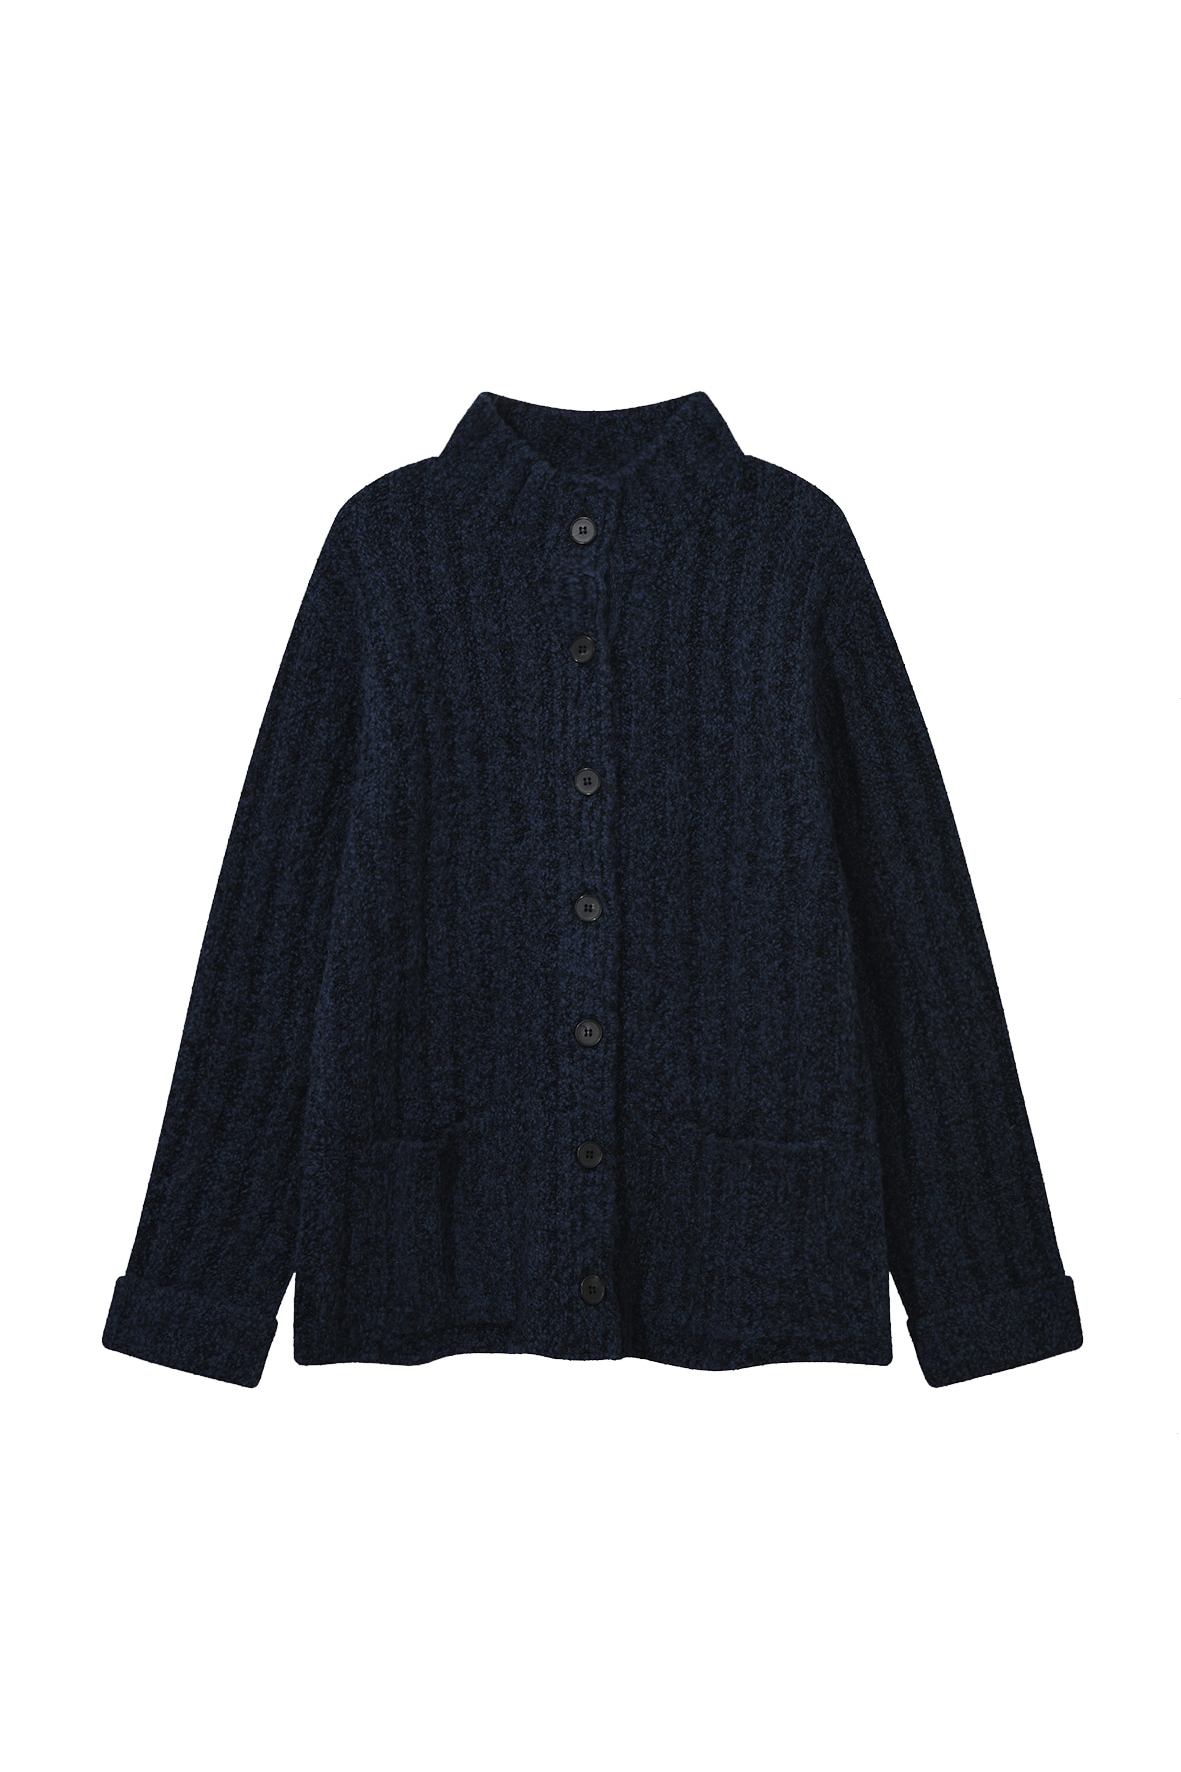 [SLOCO] High neck knit jacket, navy